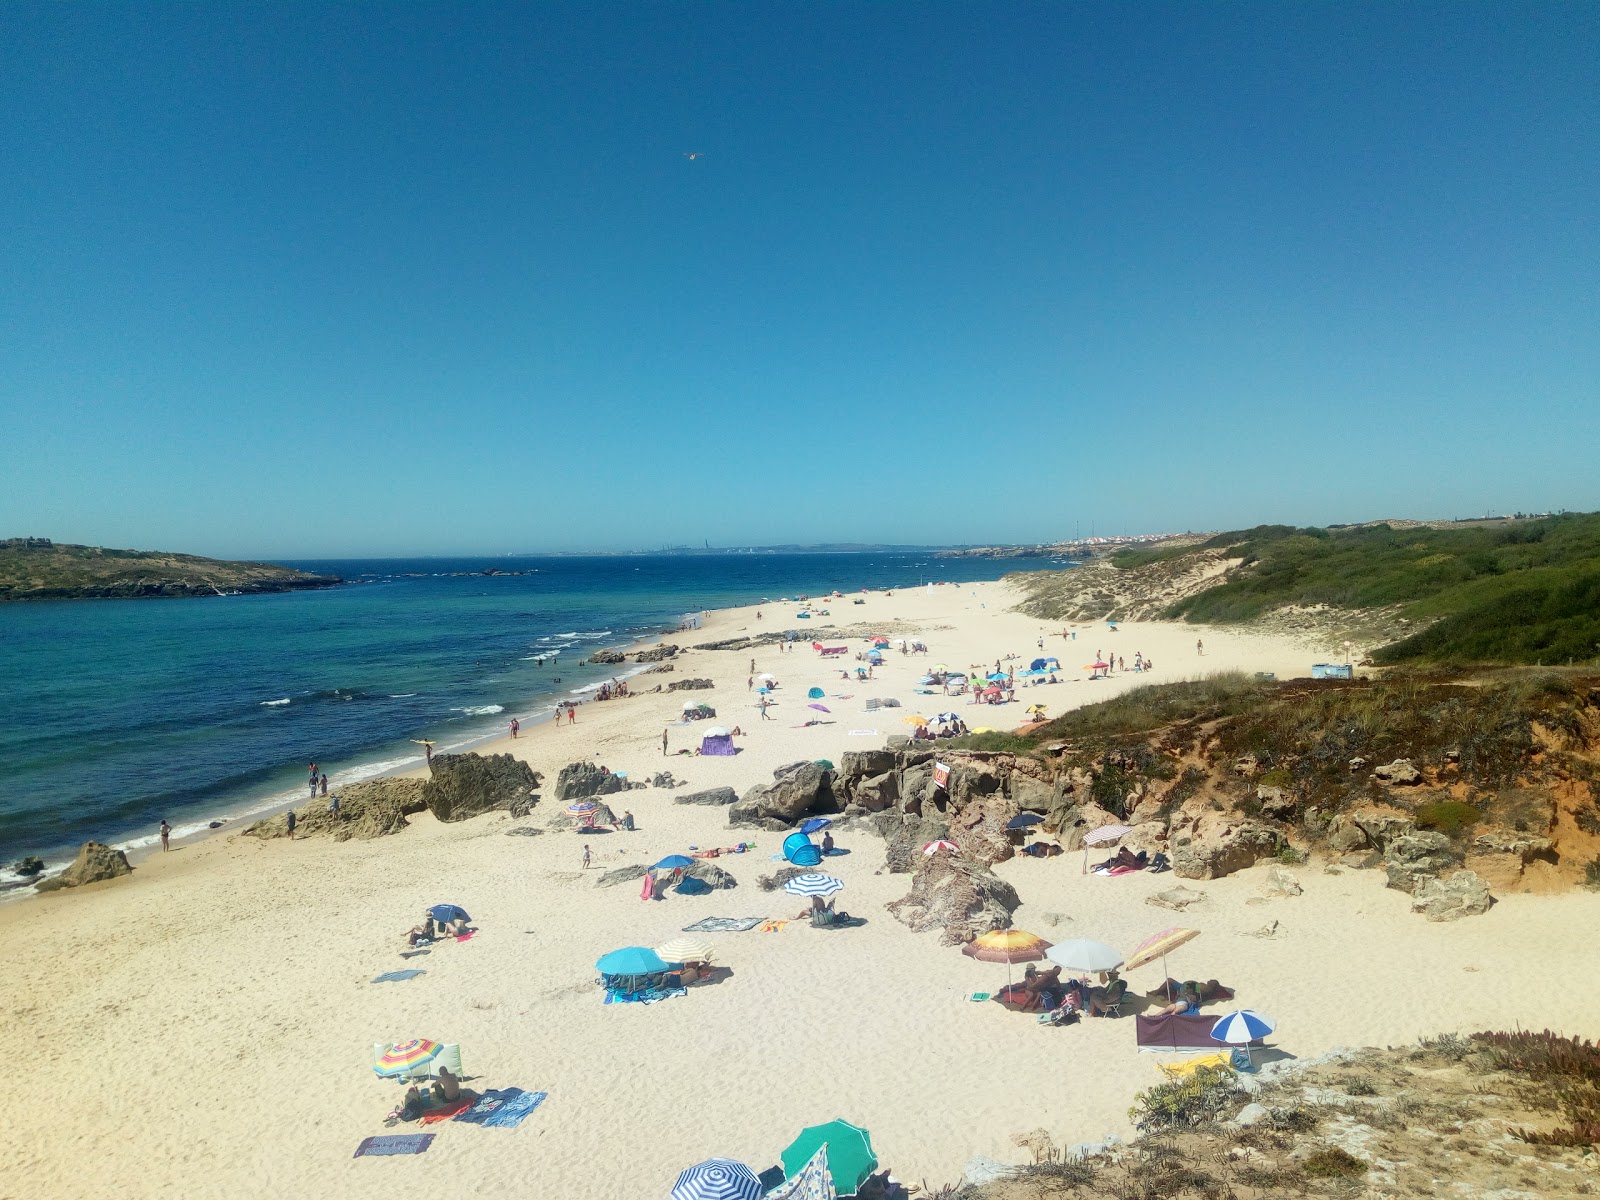 Fotografija Pessegueiro Island Beach z turkizna čista voda površino